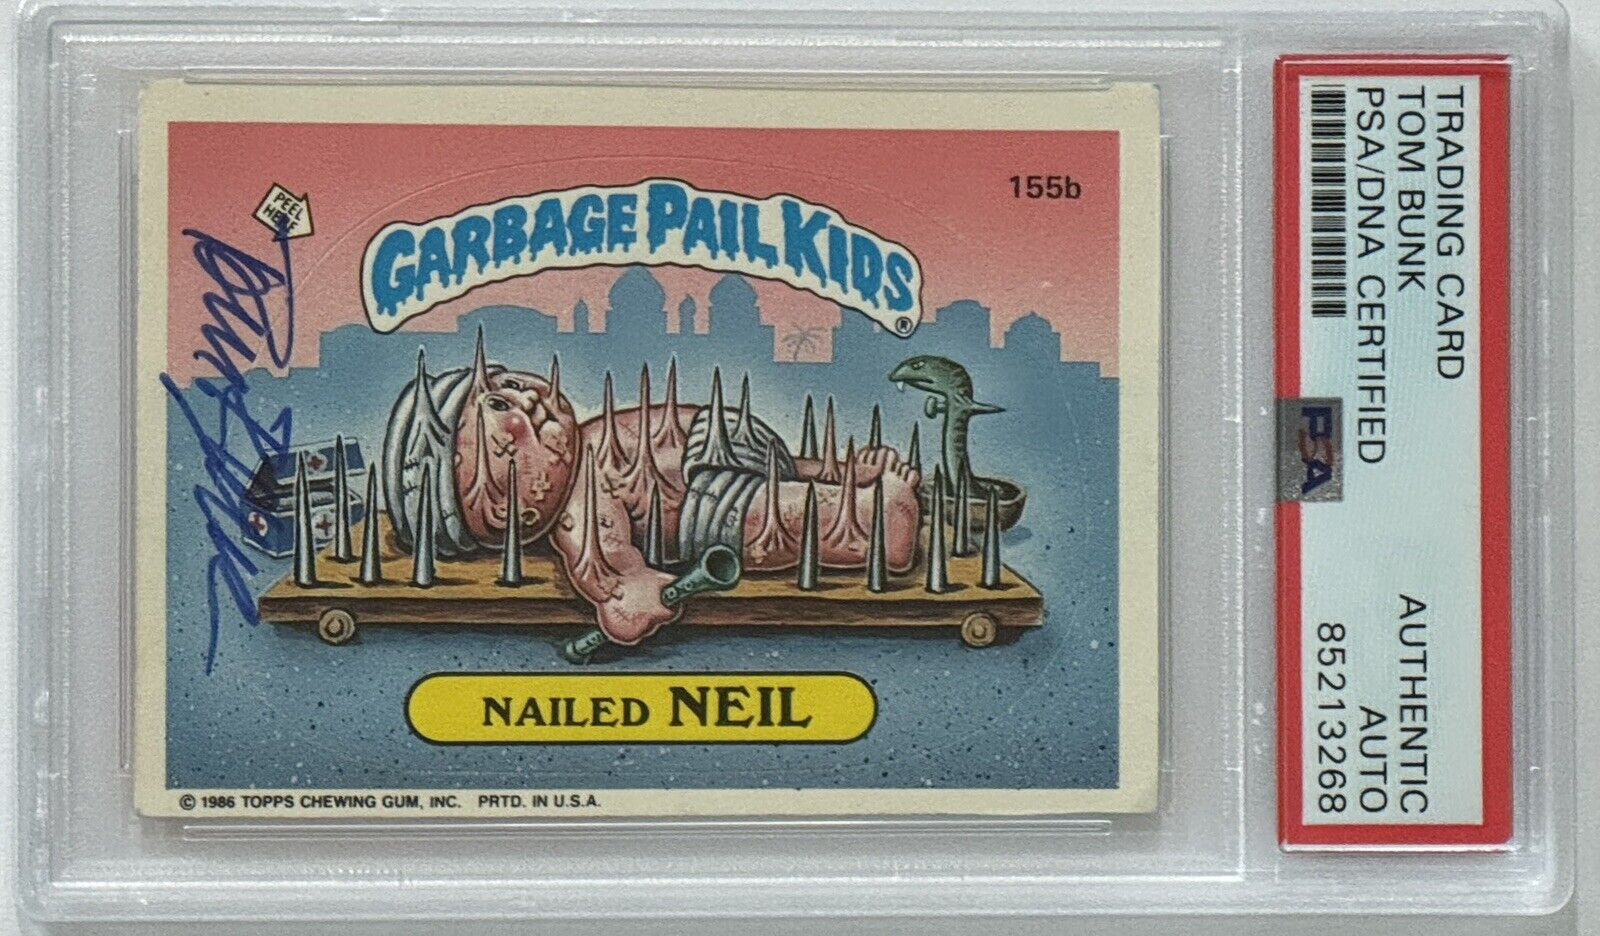 SIGNED Tom Bunk 1986 Topps Garbage Pail Kids Card Nailed Neil #155B PSA DNA COA